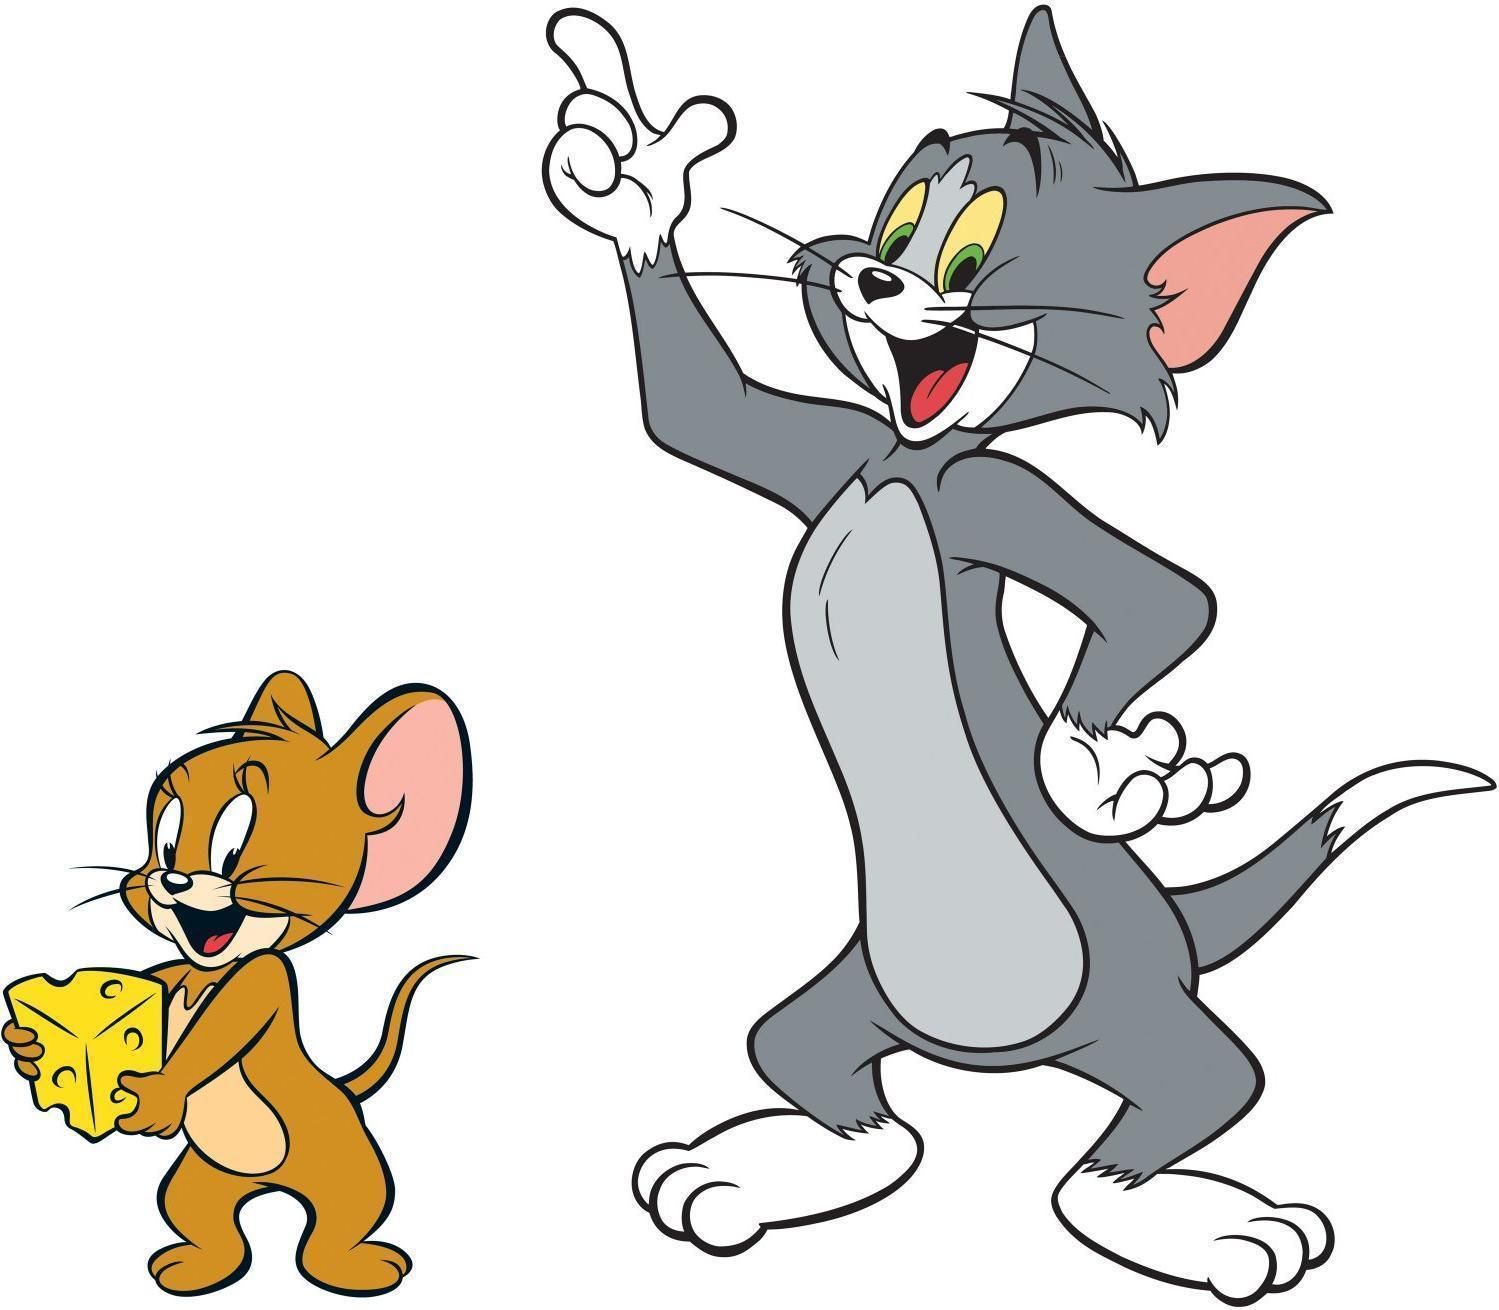 Jerry том и джерри. Tom and Jerry. Герои мультика том и Джерри. Tom and Jerry Tom. Том и Джерри Джерри.